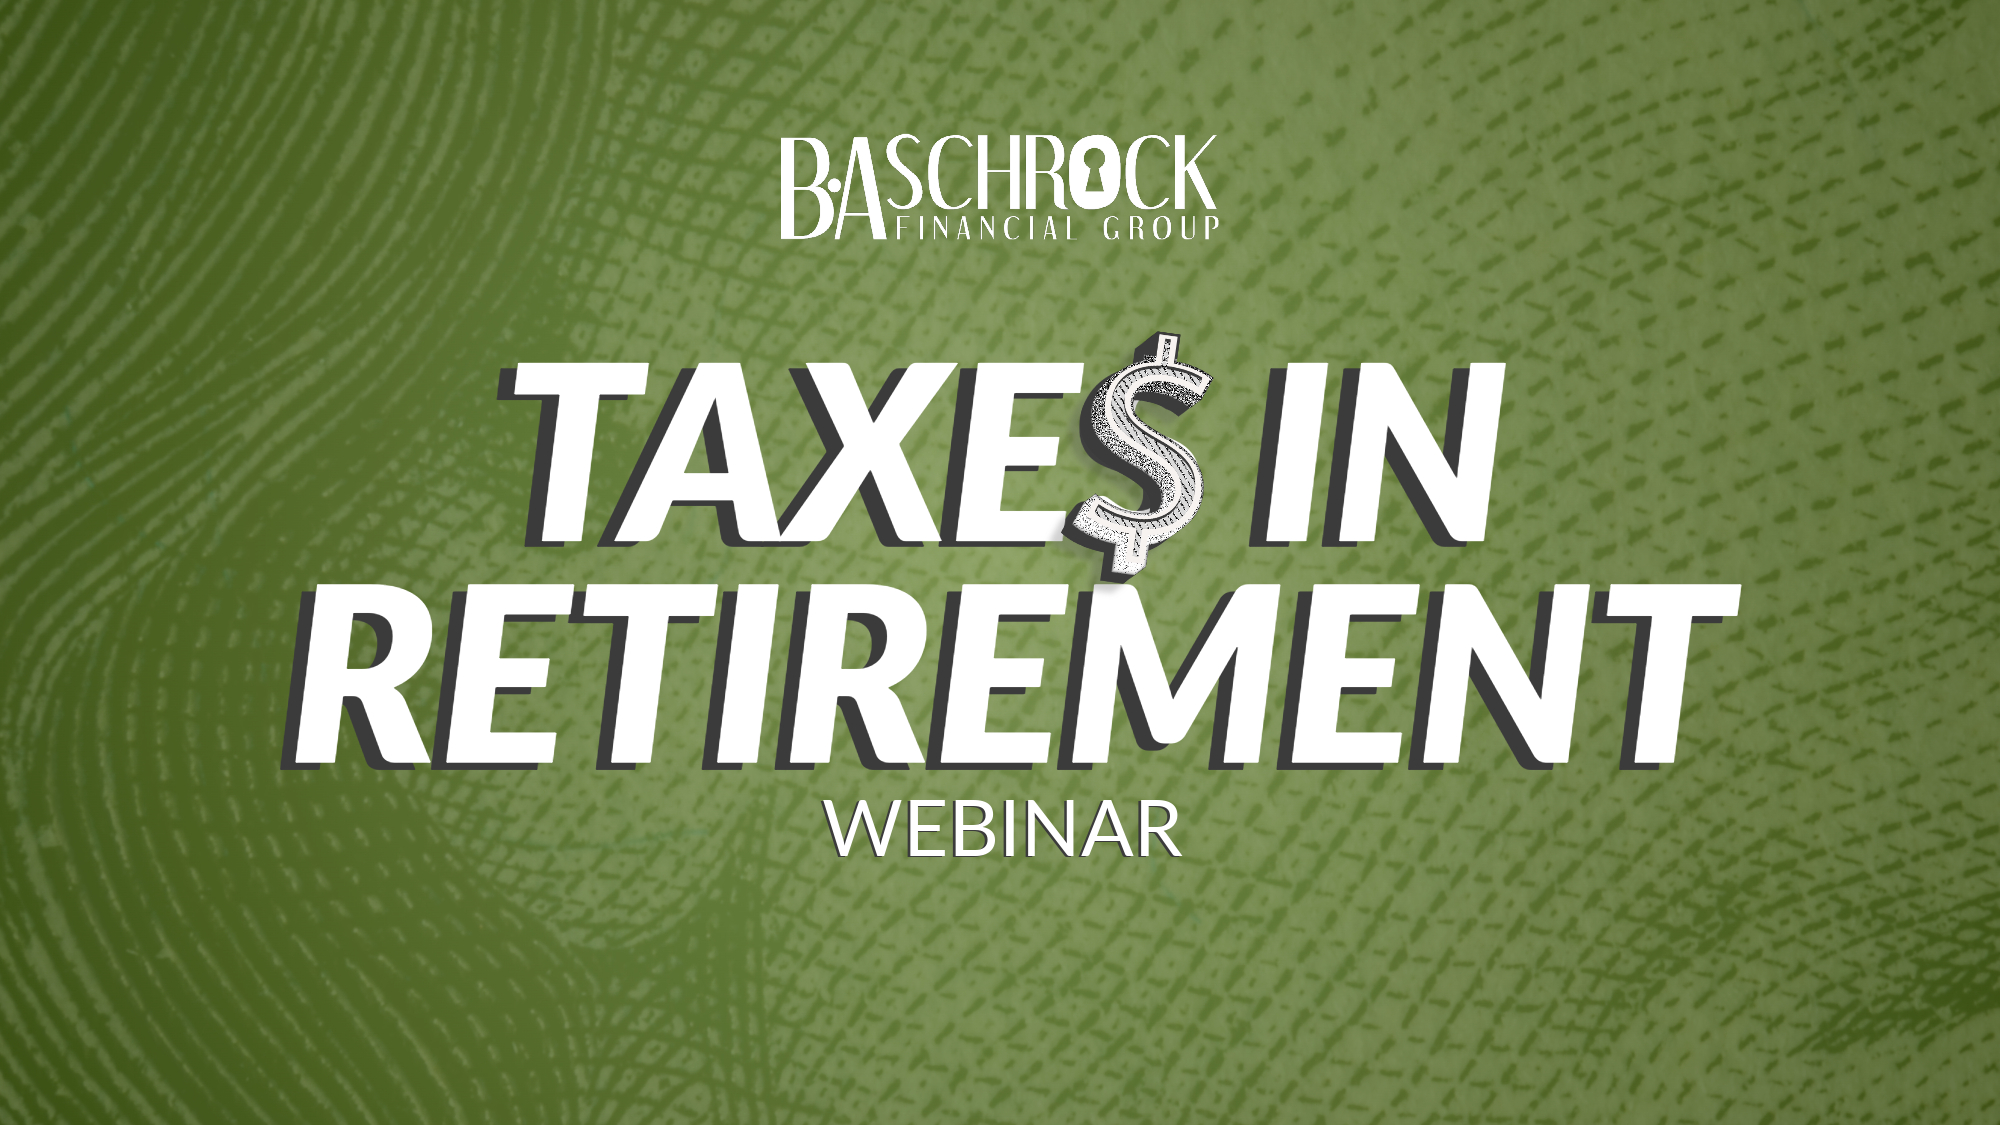 BA Schrock - Taxes in Retirement